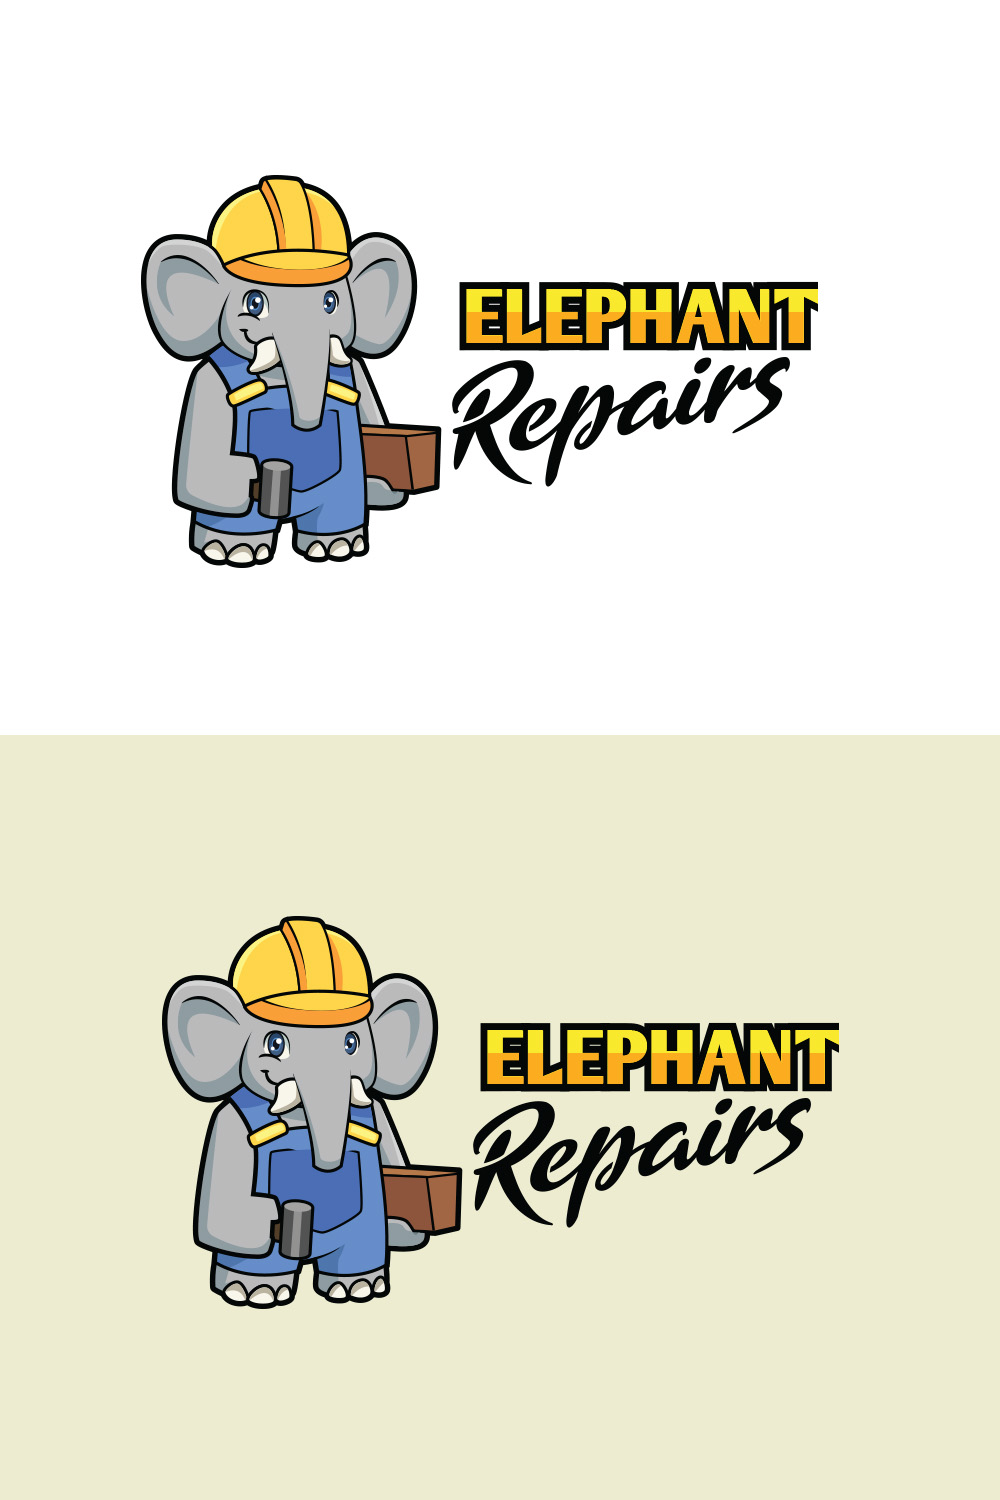 Elephant Repair Cartoon Mascot Logo pinterest preview image.